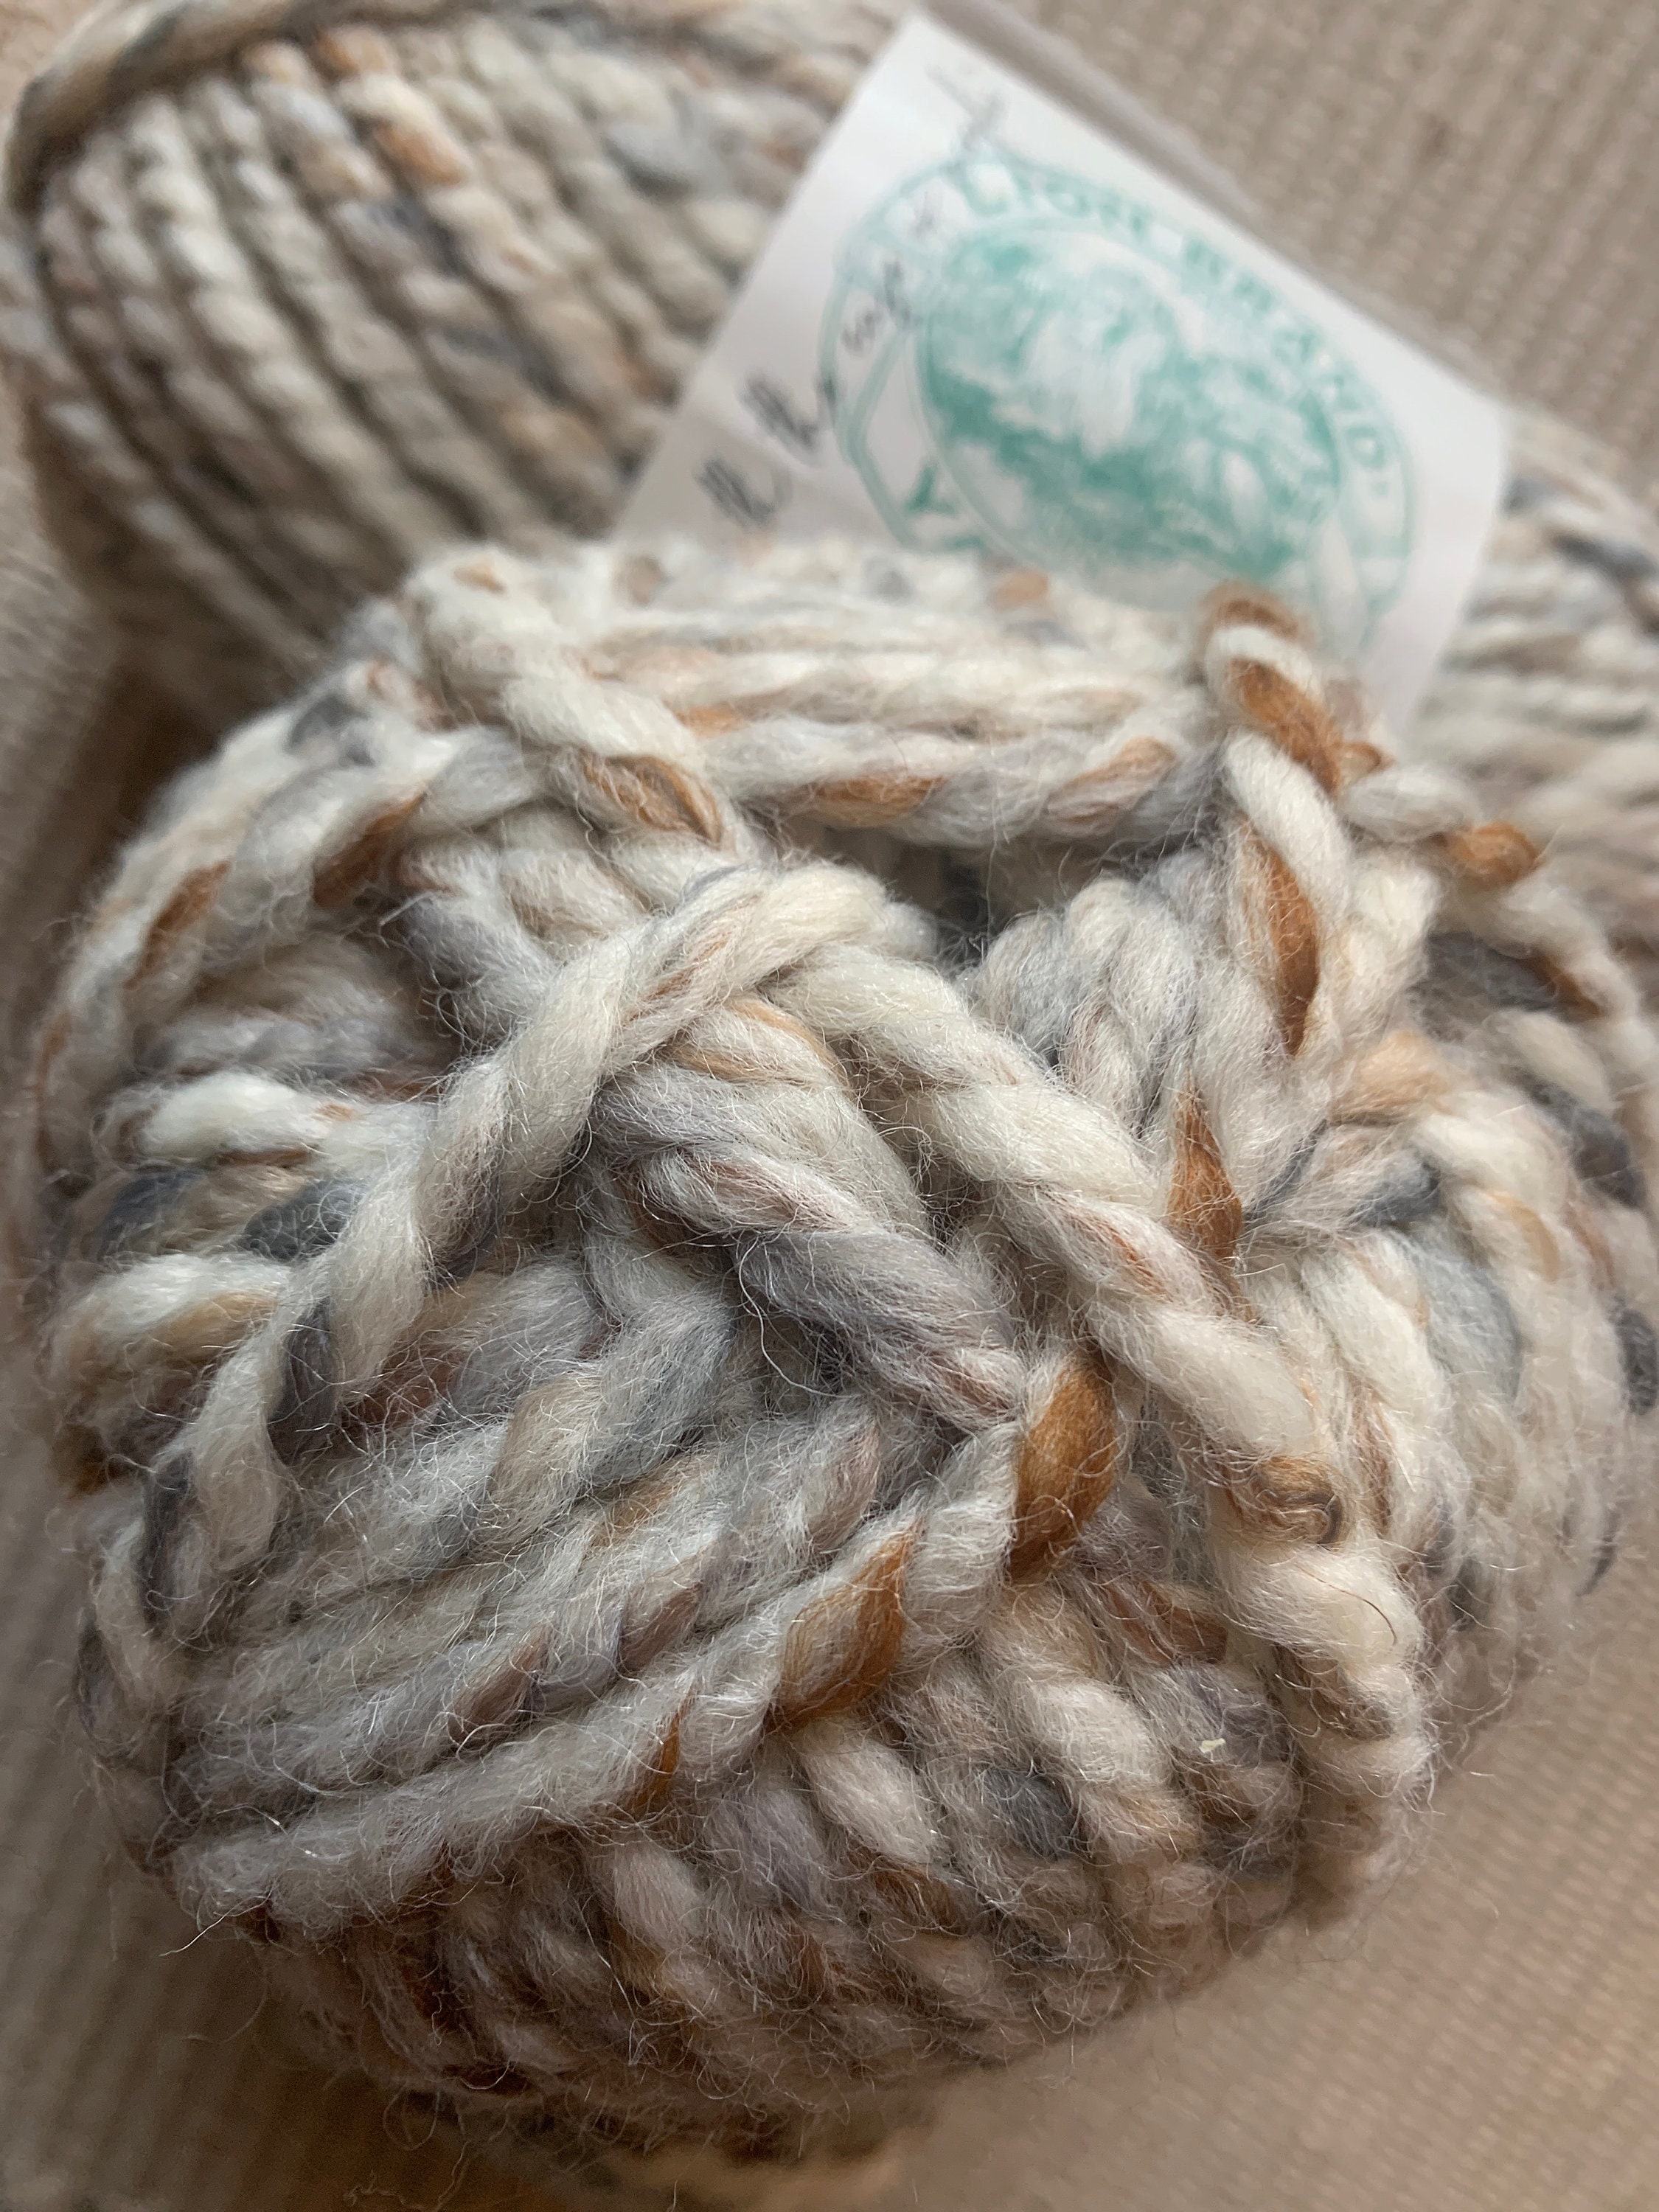 Lion Brand Yarn Feels Like Butta Thick & Quick Super Bulky Yarn for Knitting, 3 Pack, Woodrose